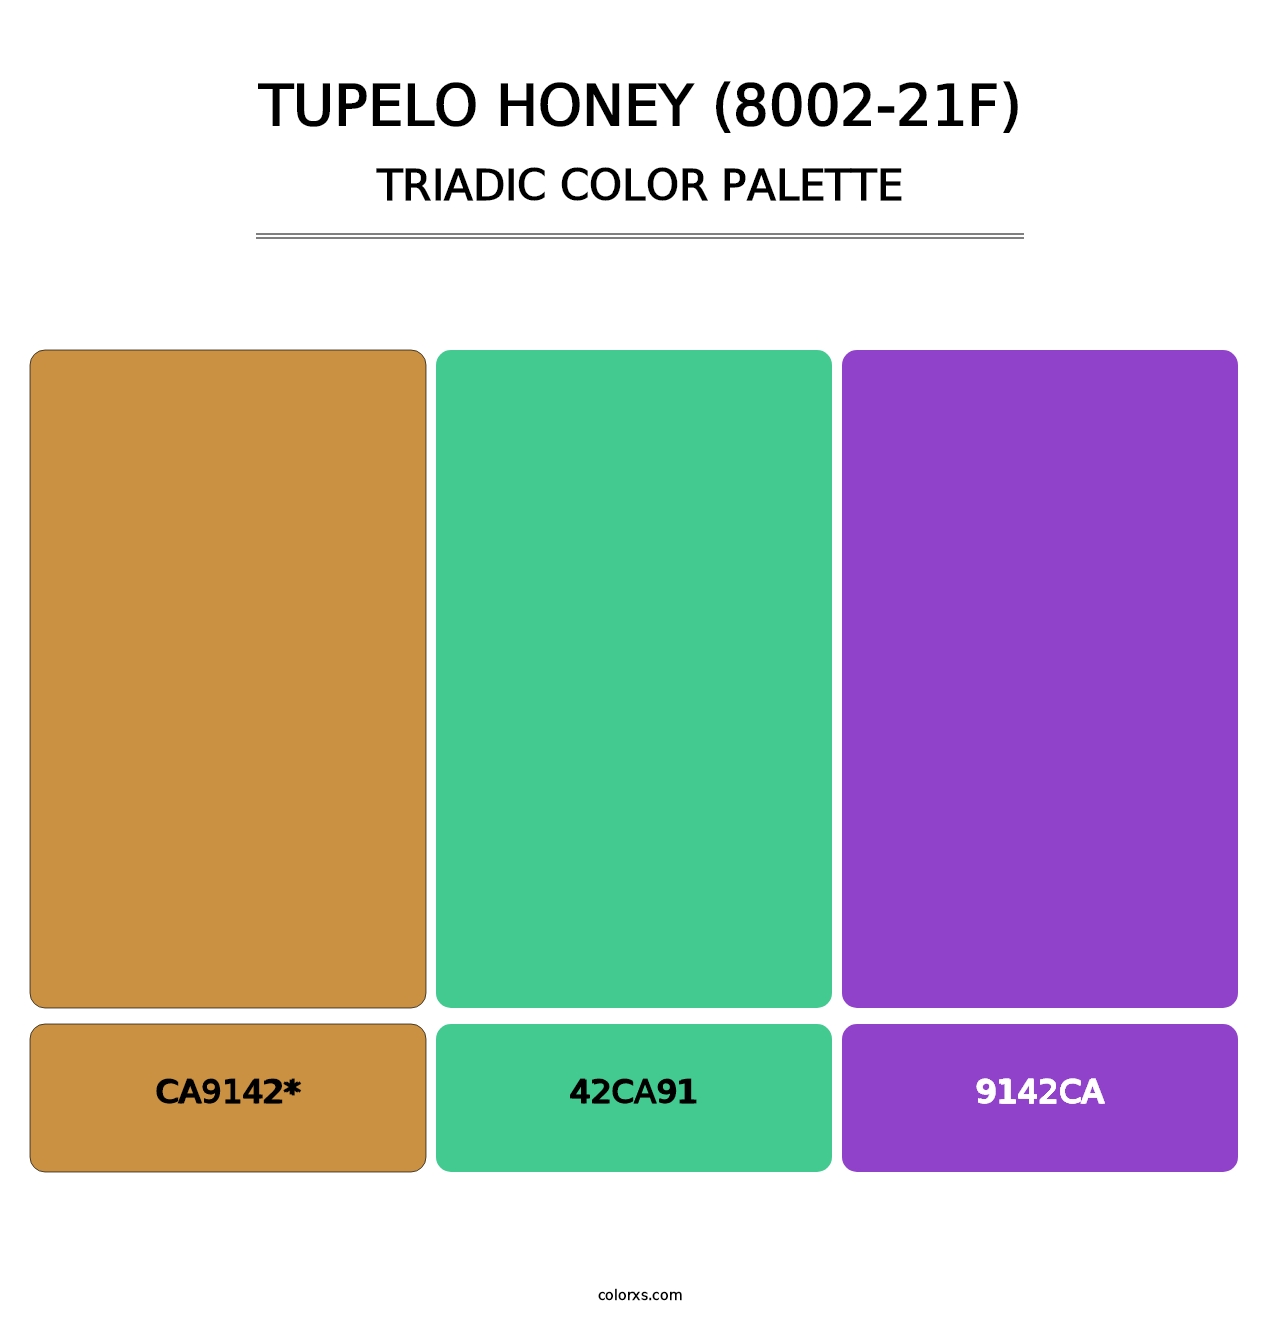 Tupelo Honey (8002-21F) - Triadic Color Palette